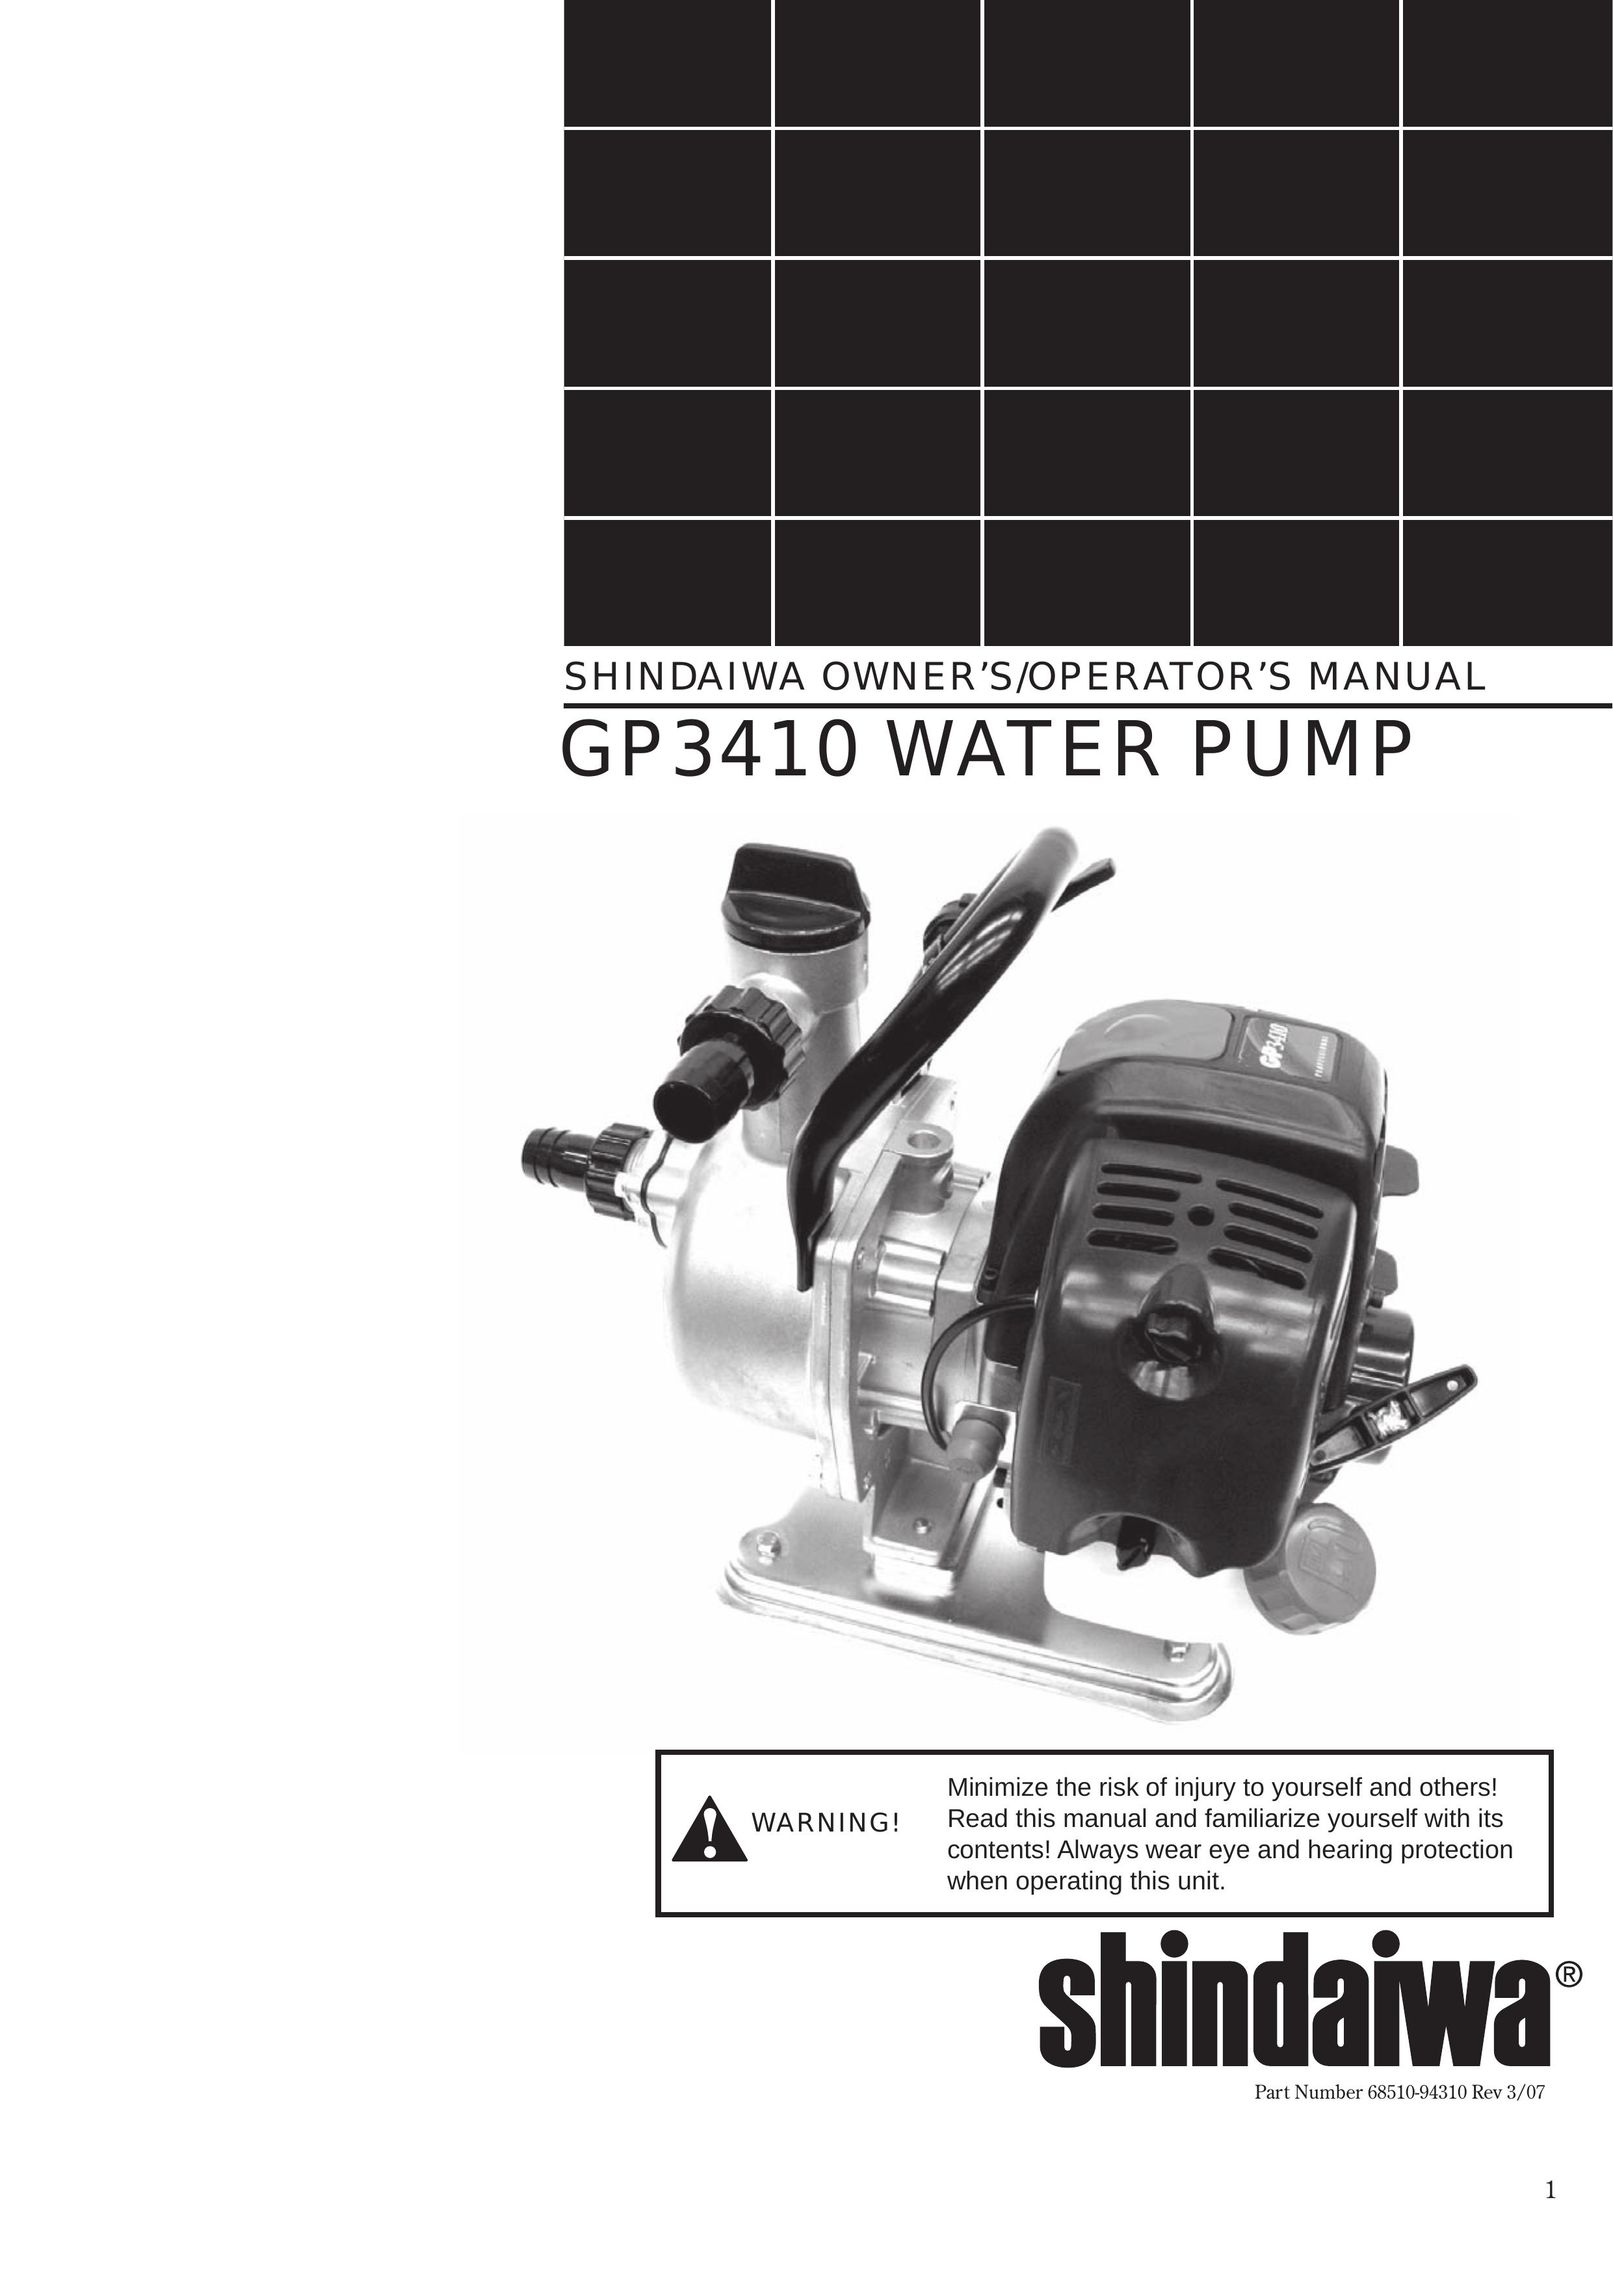 Shindaiwa 6850-9430 Water Pump User Manual